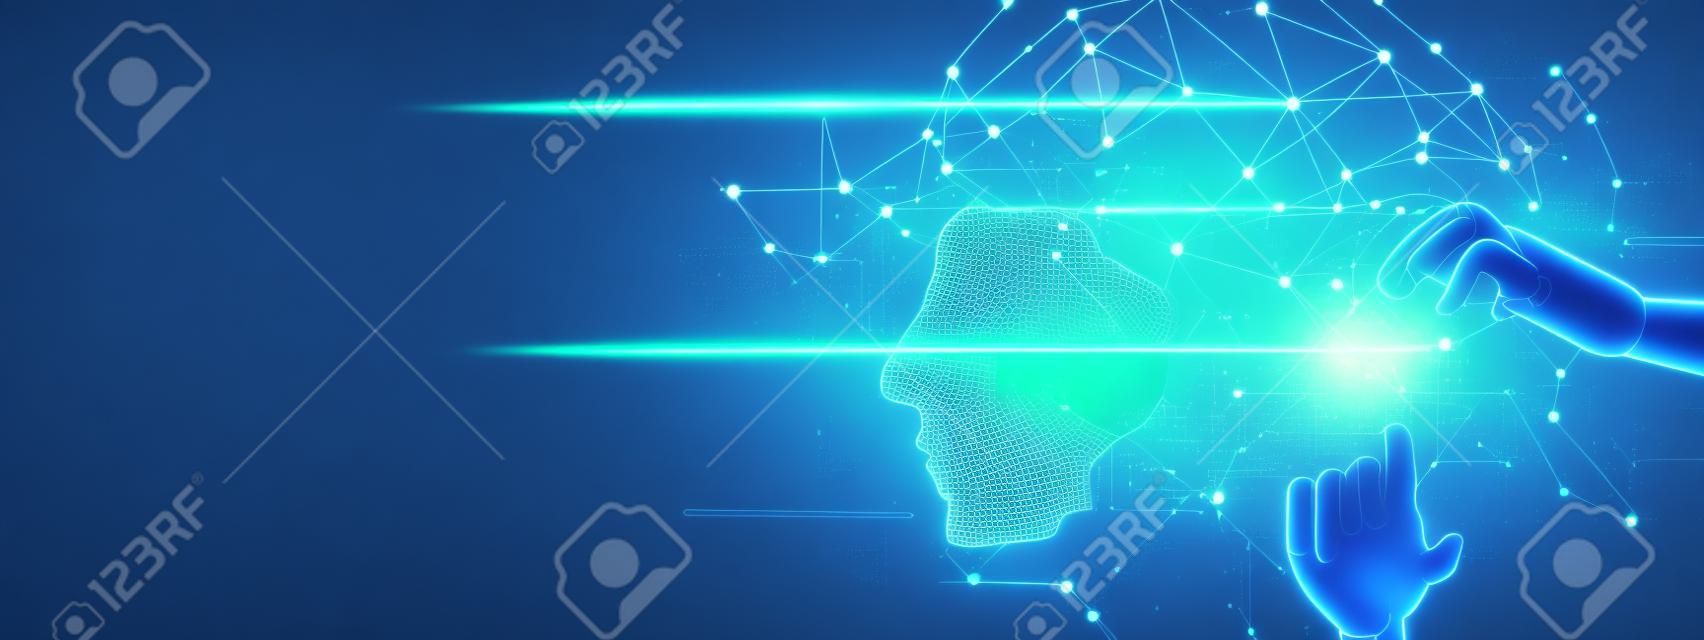 Machine learning. Hand van robot aanraken op binaire gegevens. Futuristic Artificial Intelligence (AI). Deep Learning. Brain representant. Algorithm en innovatief. Neural Network. Big data visualisatie.